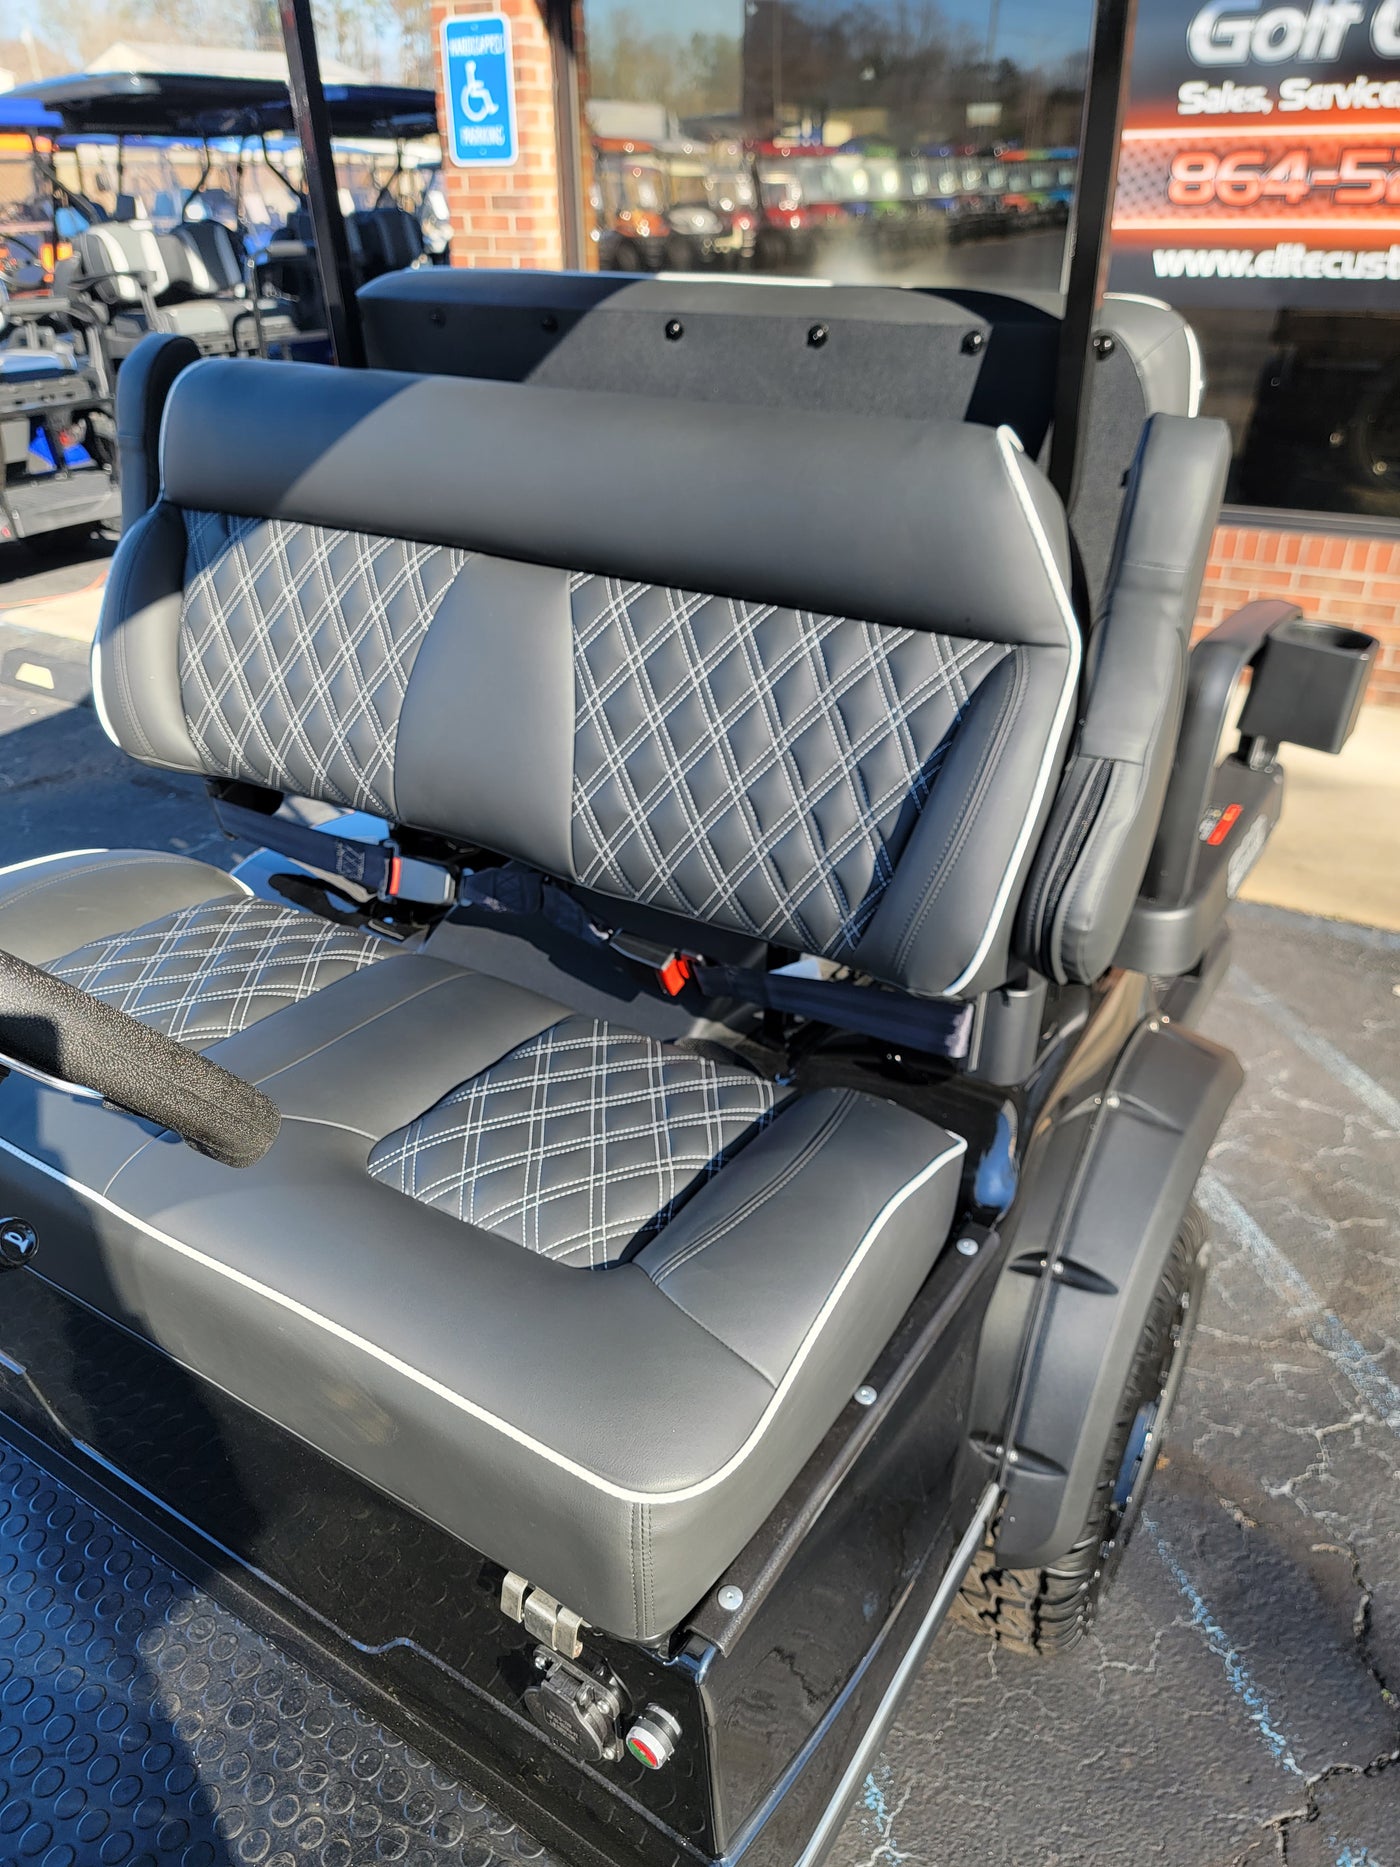 Evolution EV Golf Cart Legacy Series Premium Double Diamond Stich Seats w/Armrest fits Evolutions Classic Pro , Plus and Forester Plus